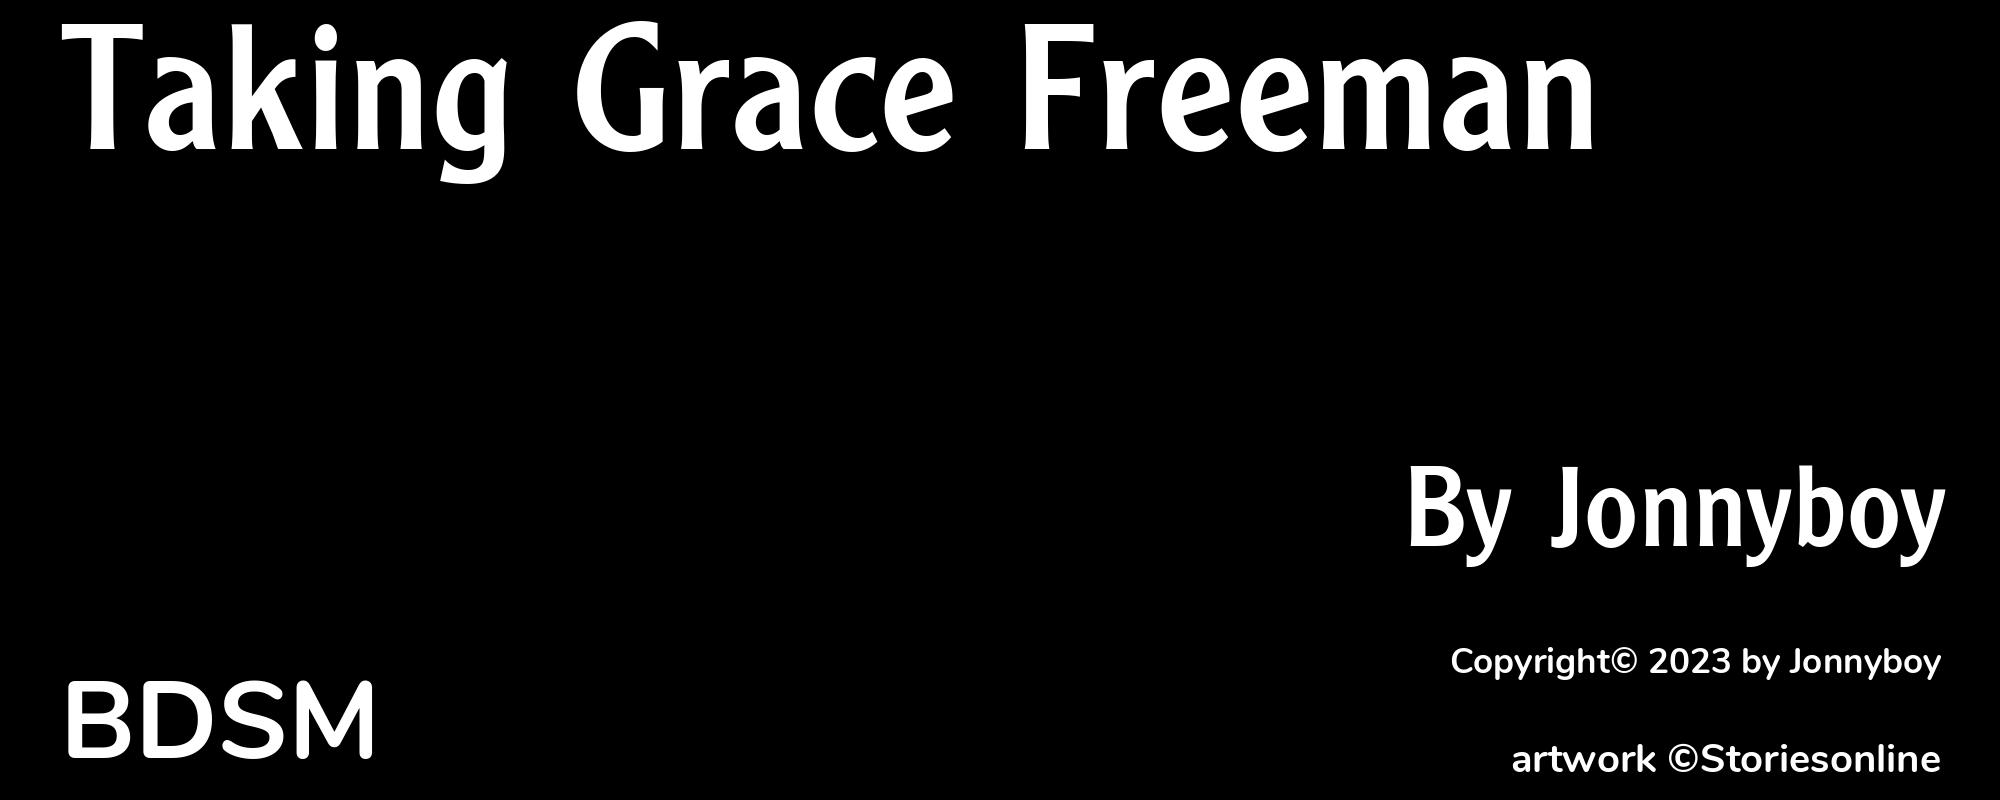 Taking Grace Freeman - Cover